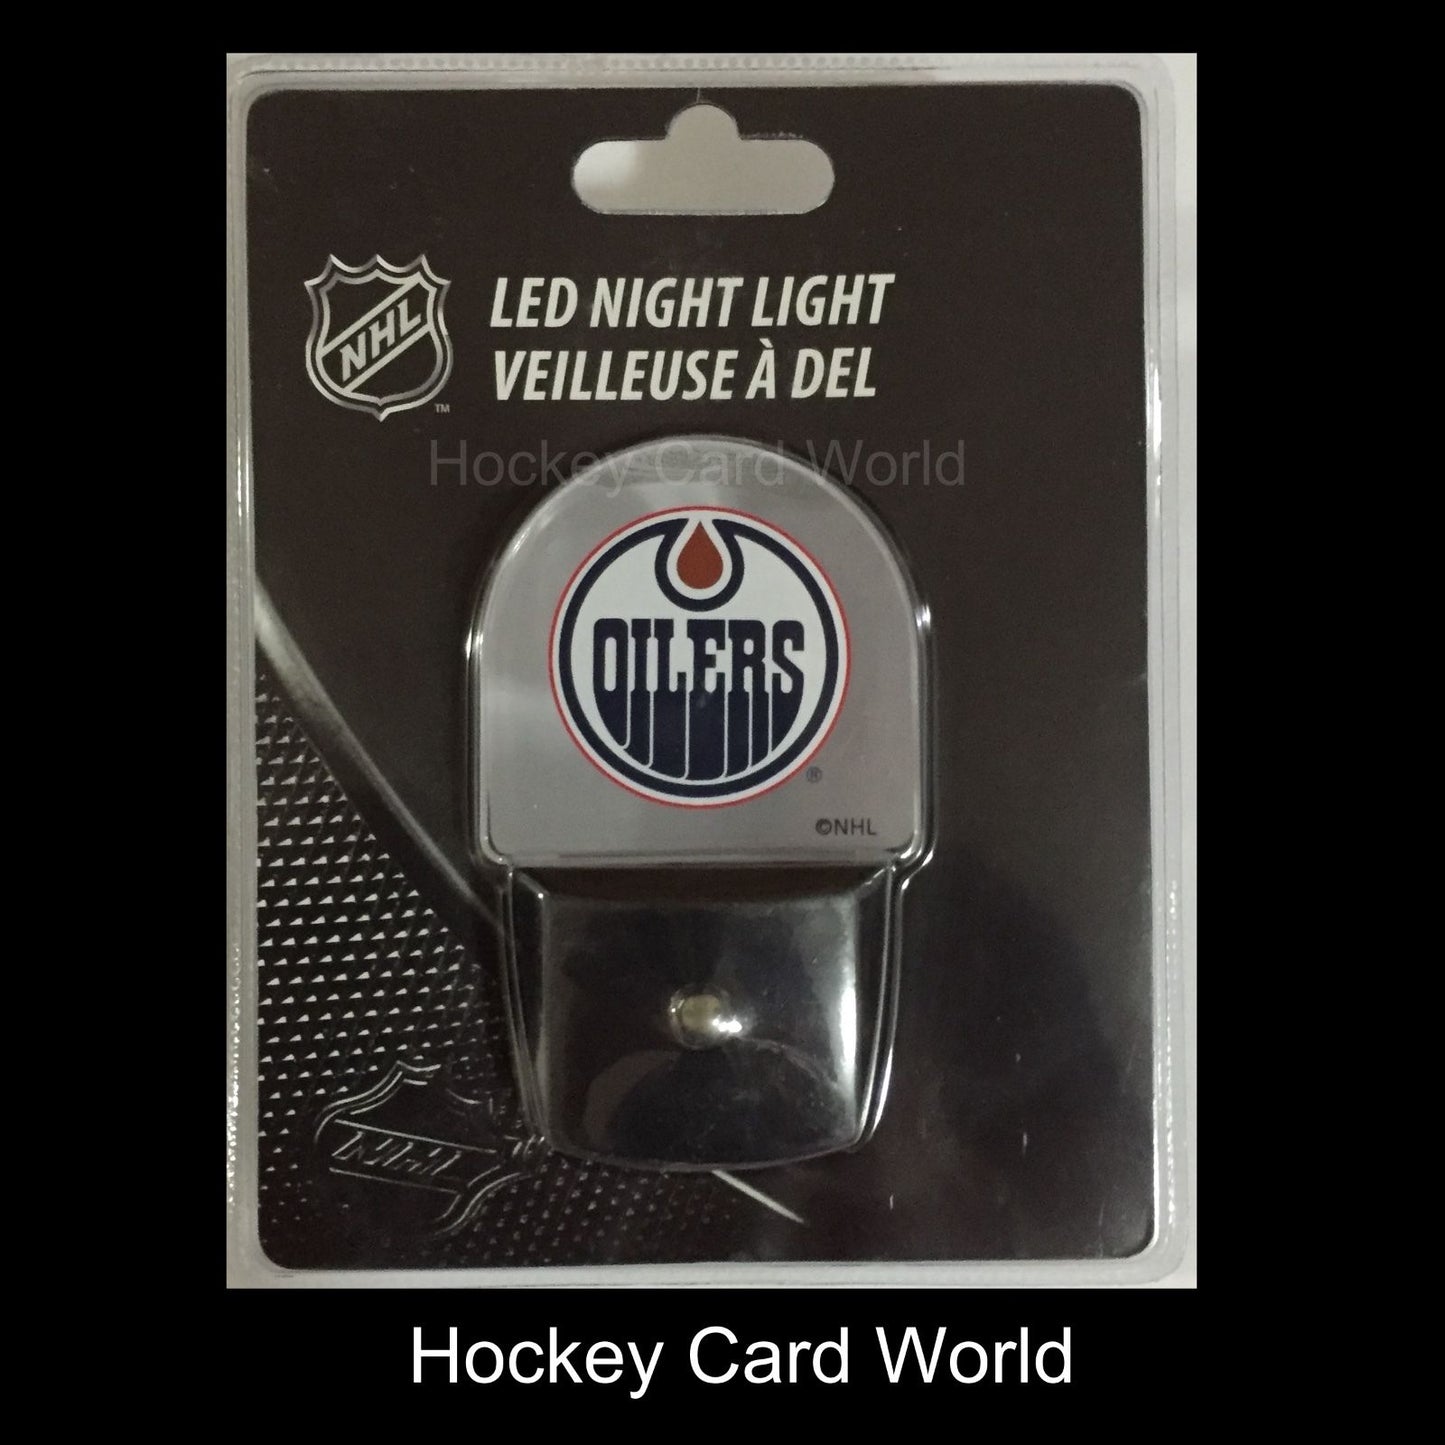  Edmonton Oilers Licensed NHL LED Night Light - Brand New In Box Image 1